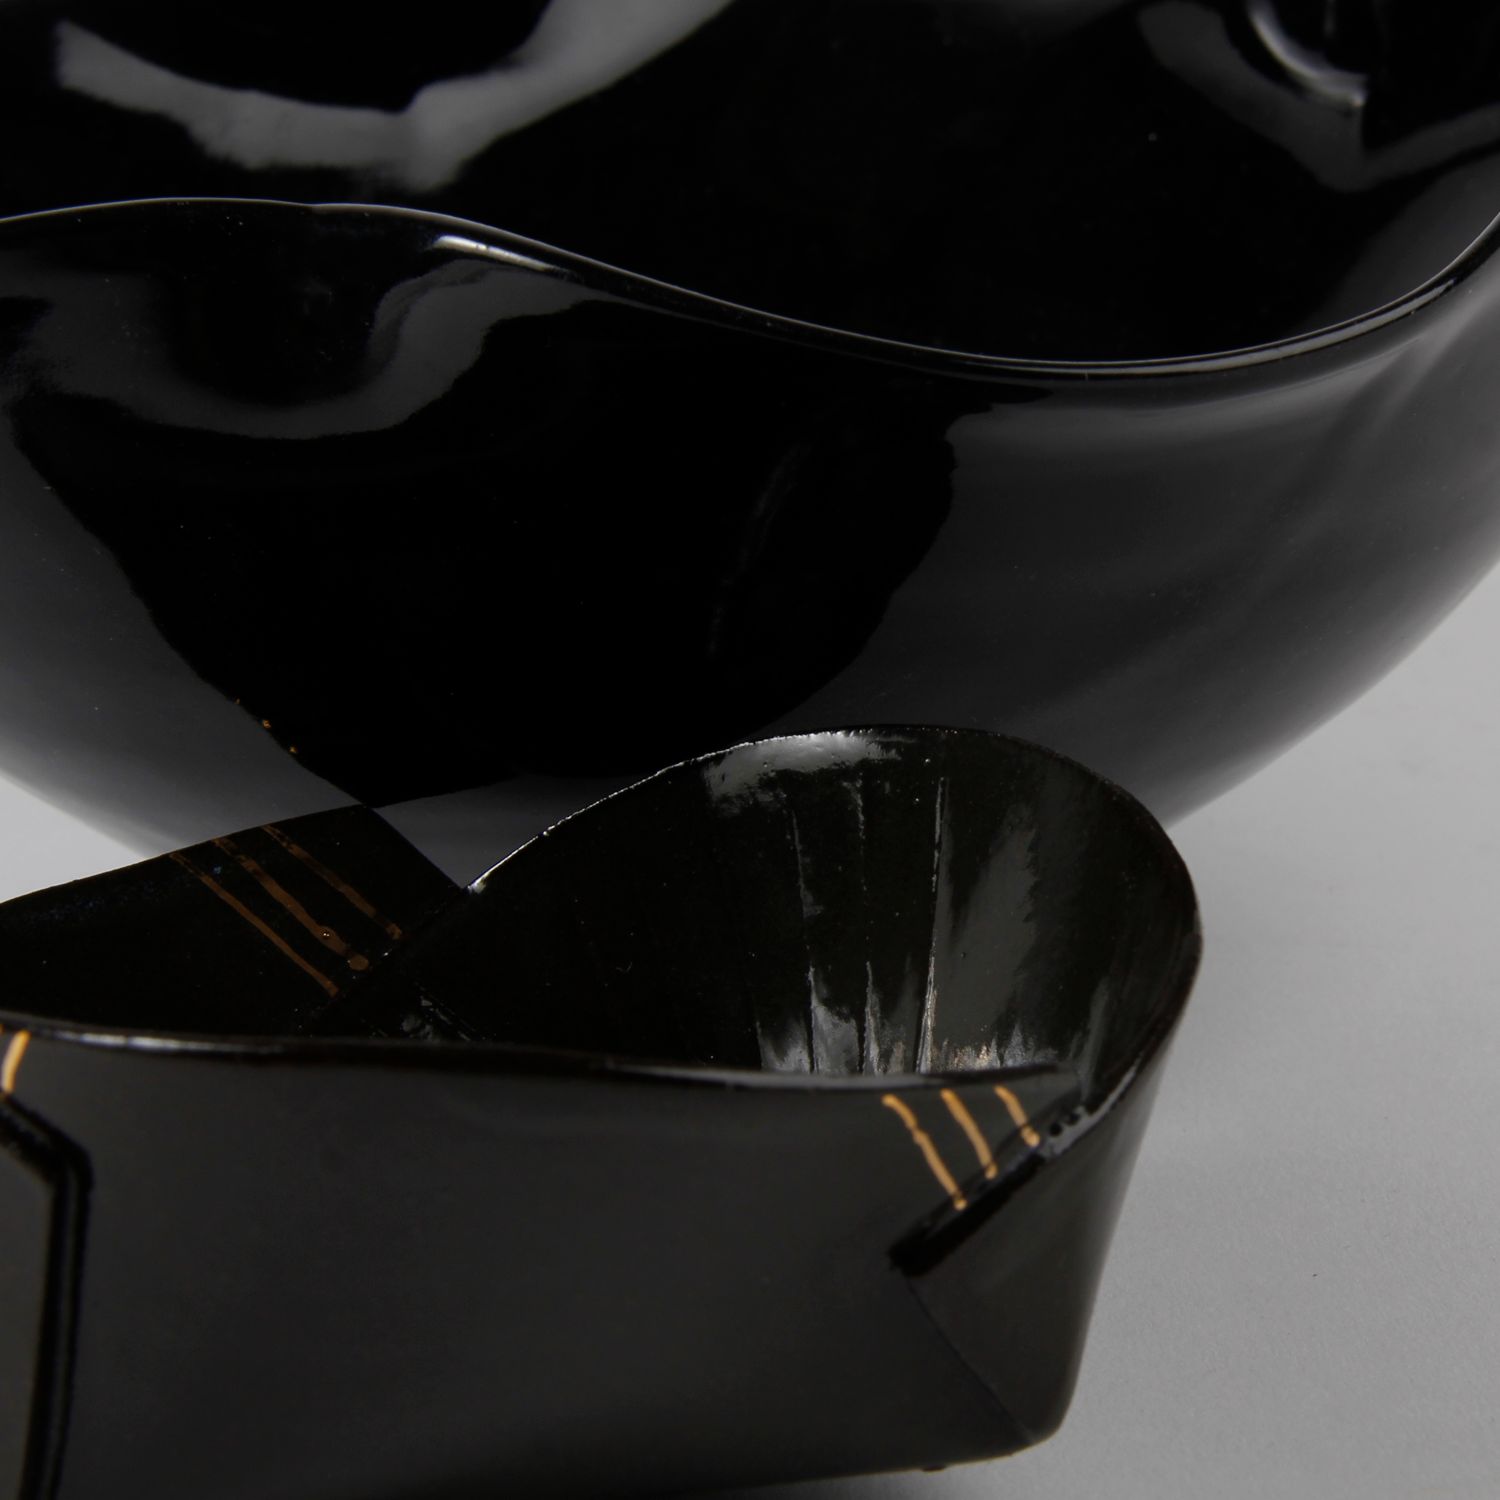 Natalie Waddell: Medium Black Footed Bowl Product Image 2 of 5